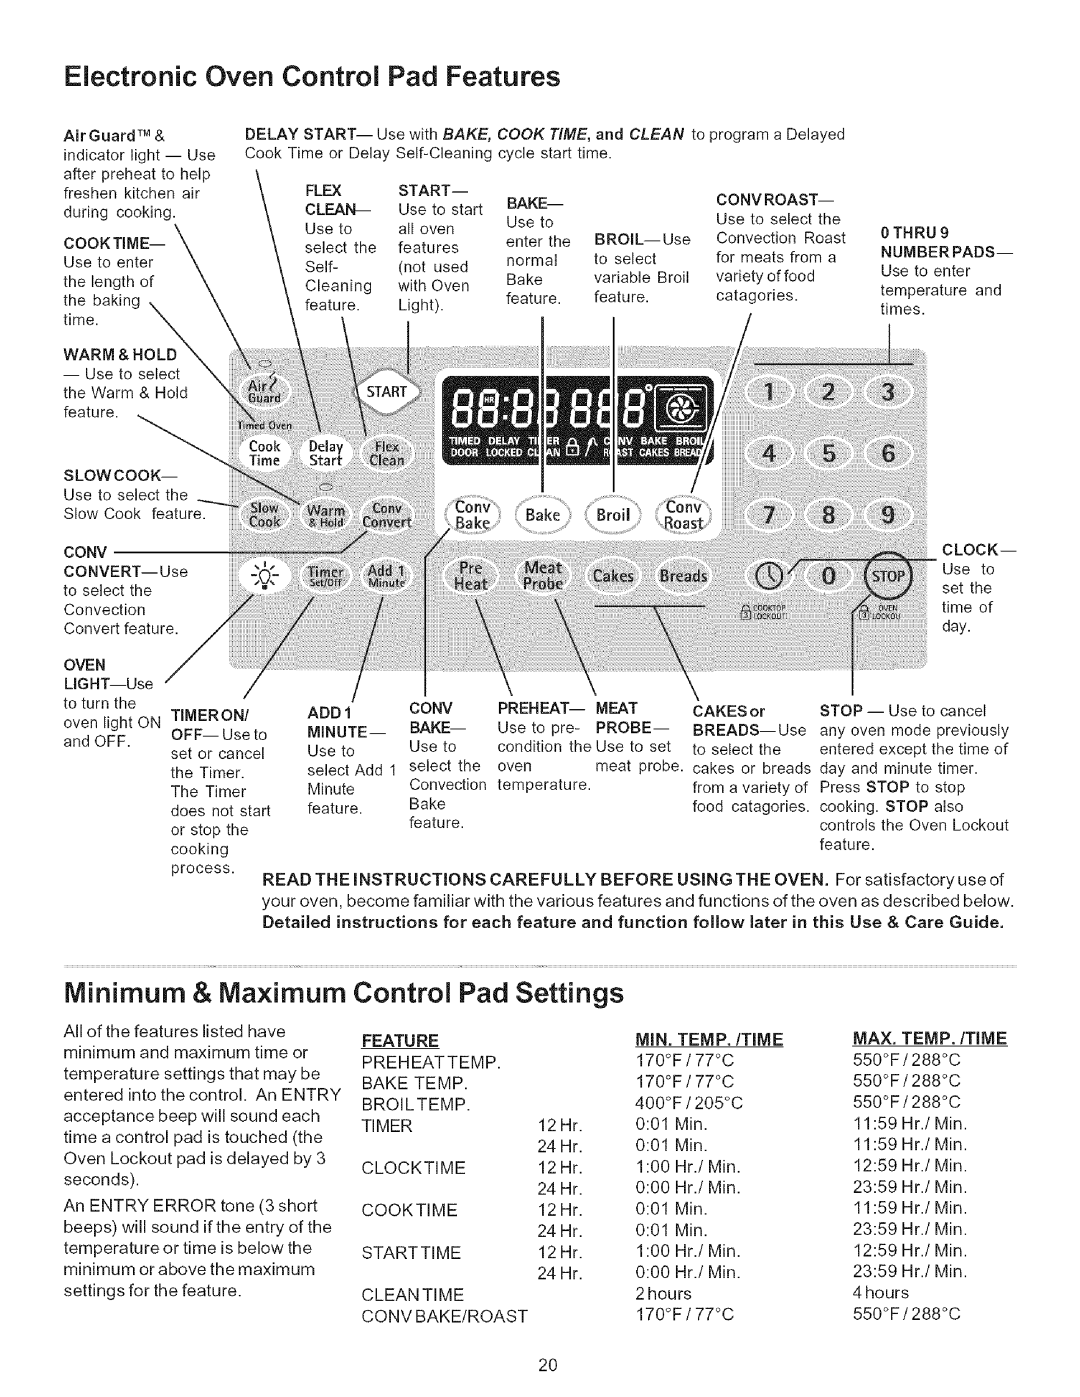 Kenmore 9664, 790-.9663 manual Electronic Oven Control Pad Features, Minimum & Maximum, Pad Settings 